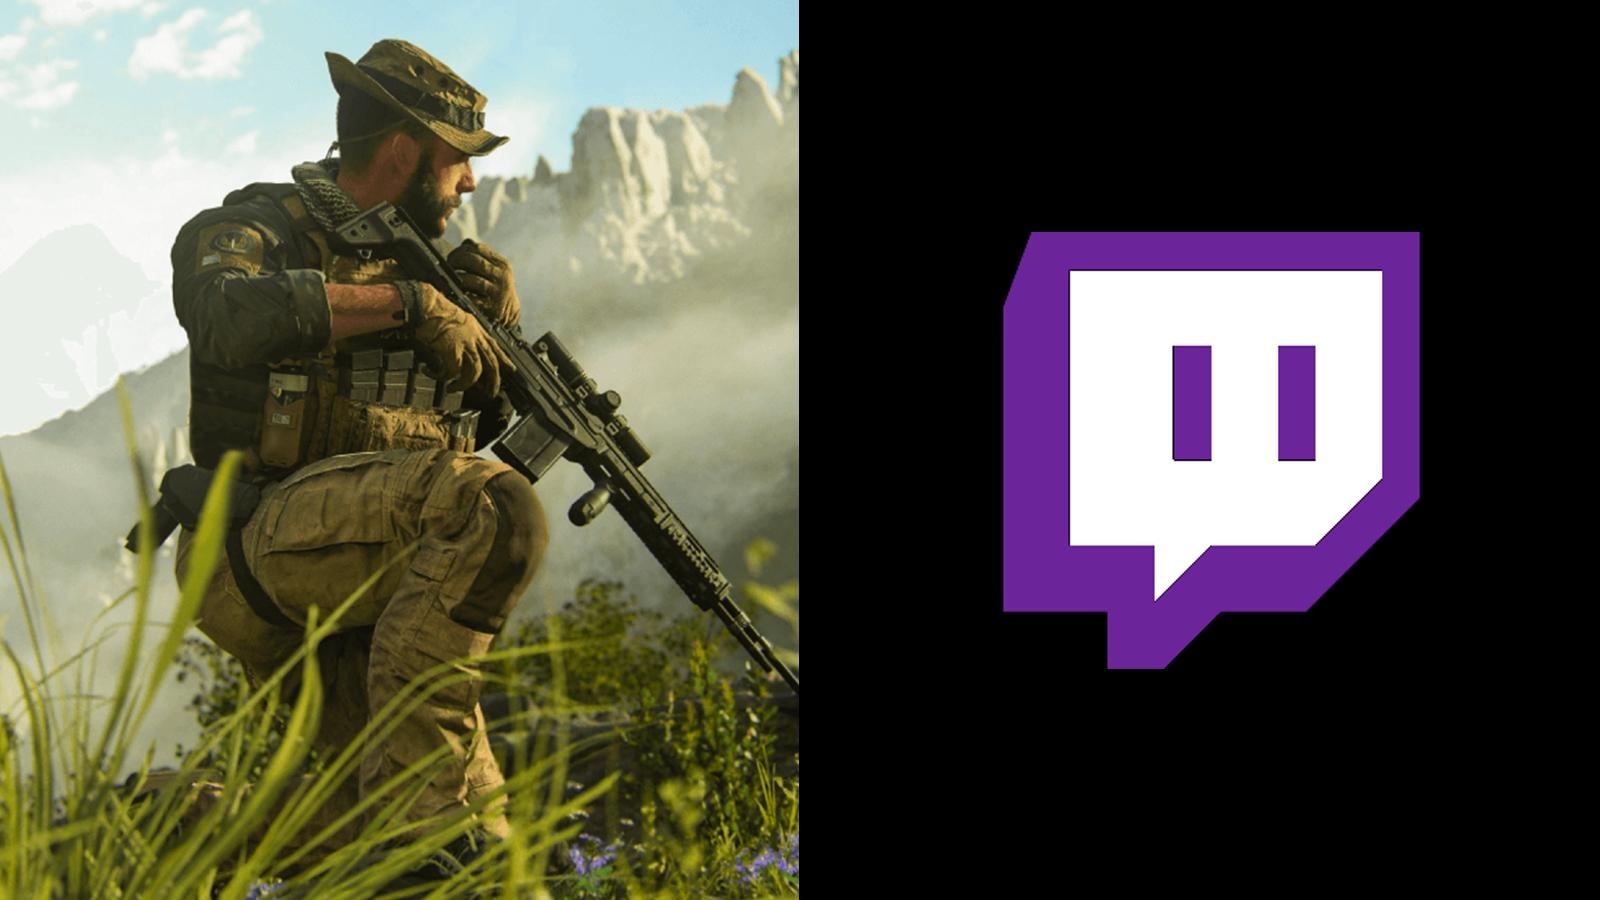 Price in Modern Warfare 3 with Twitch logo on black background